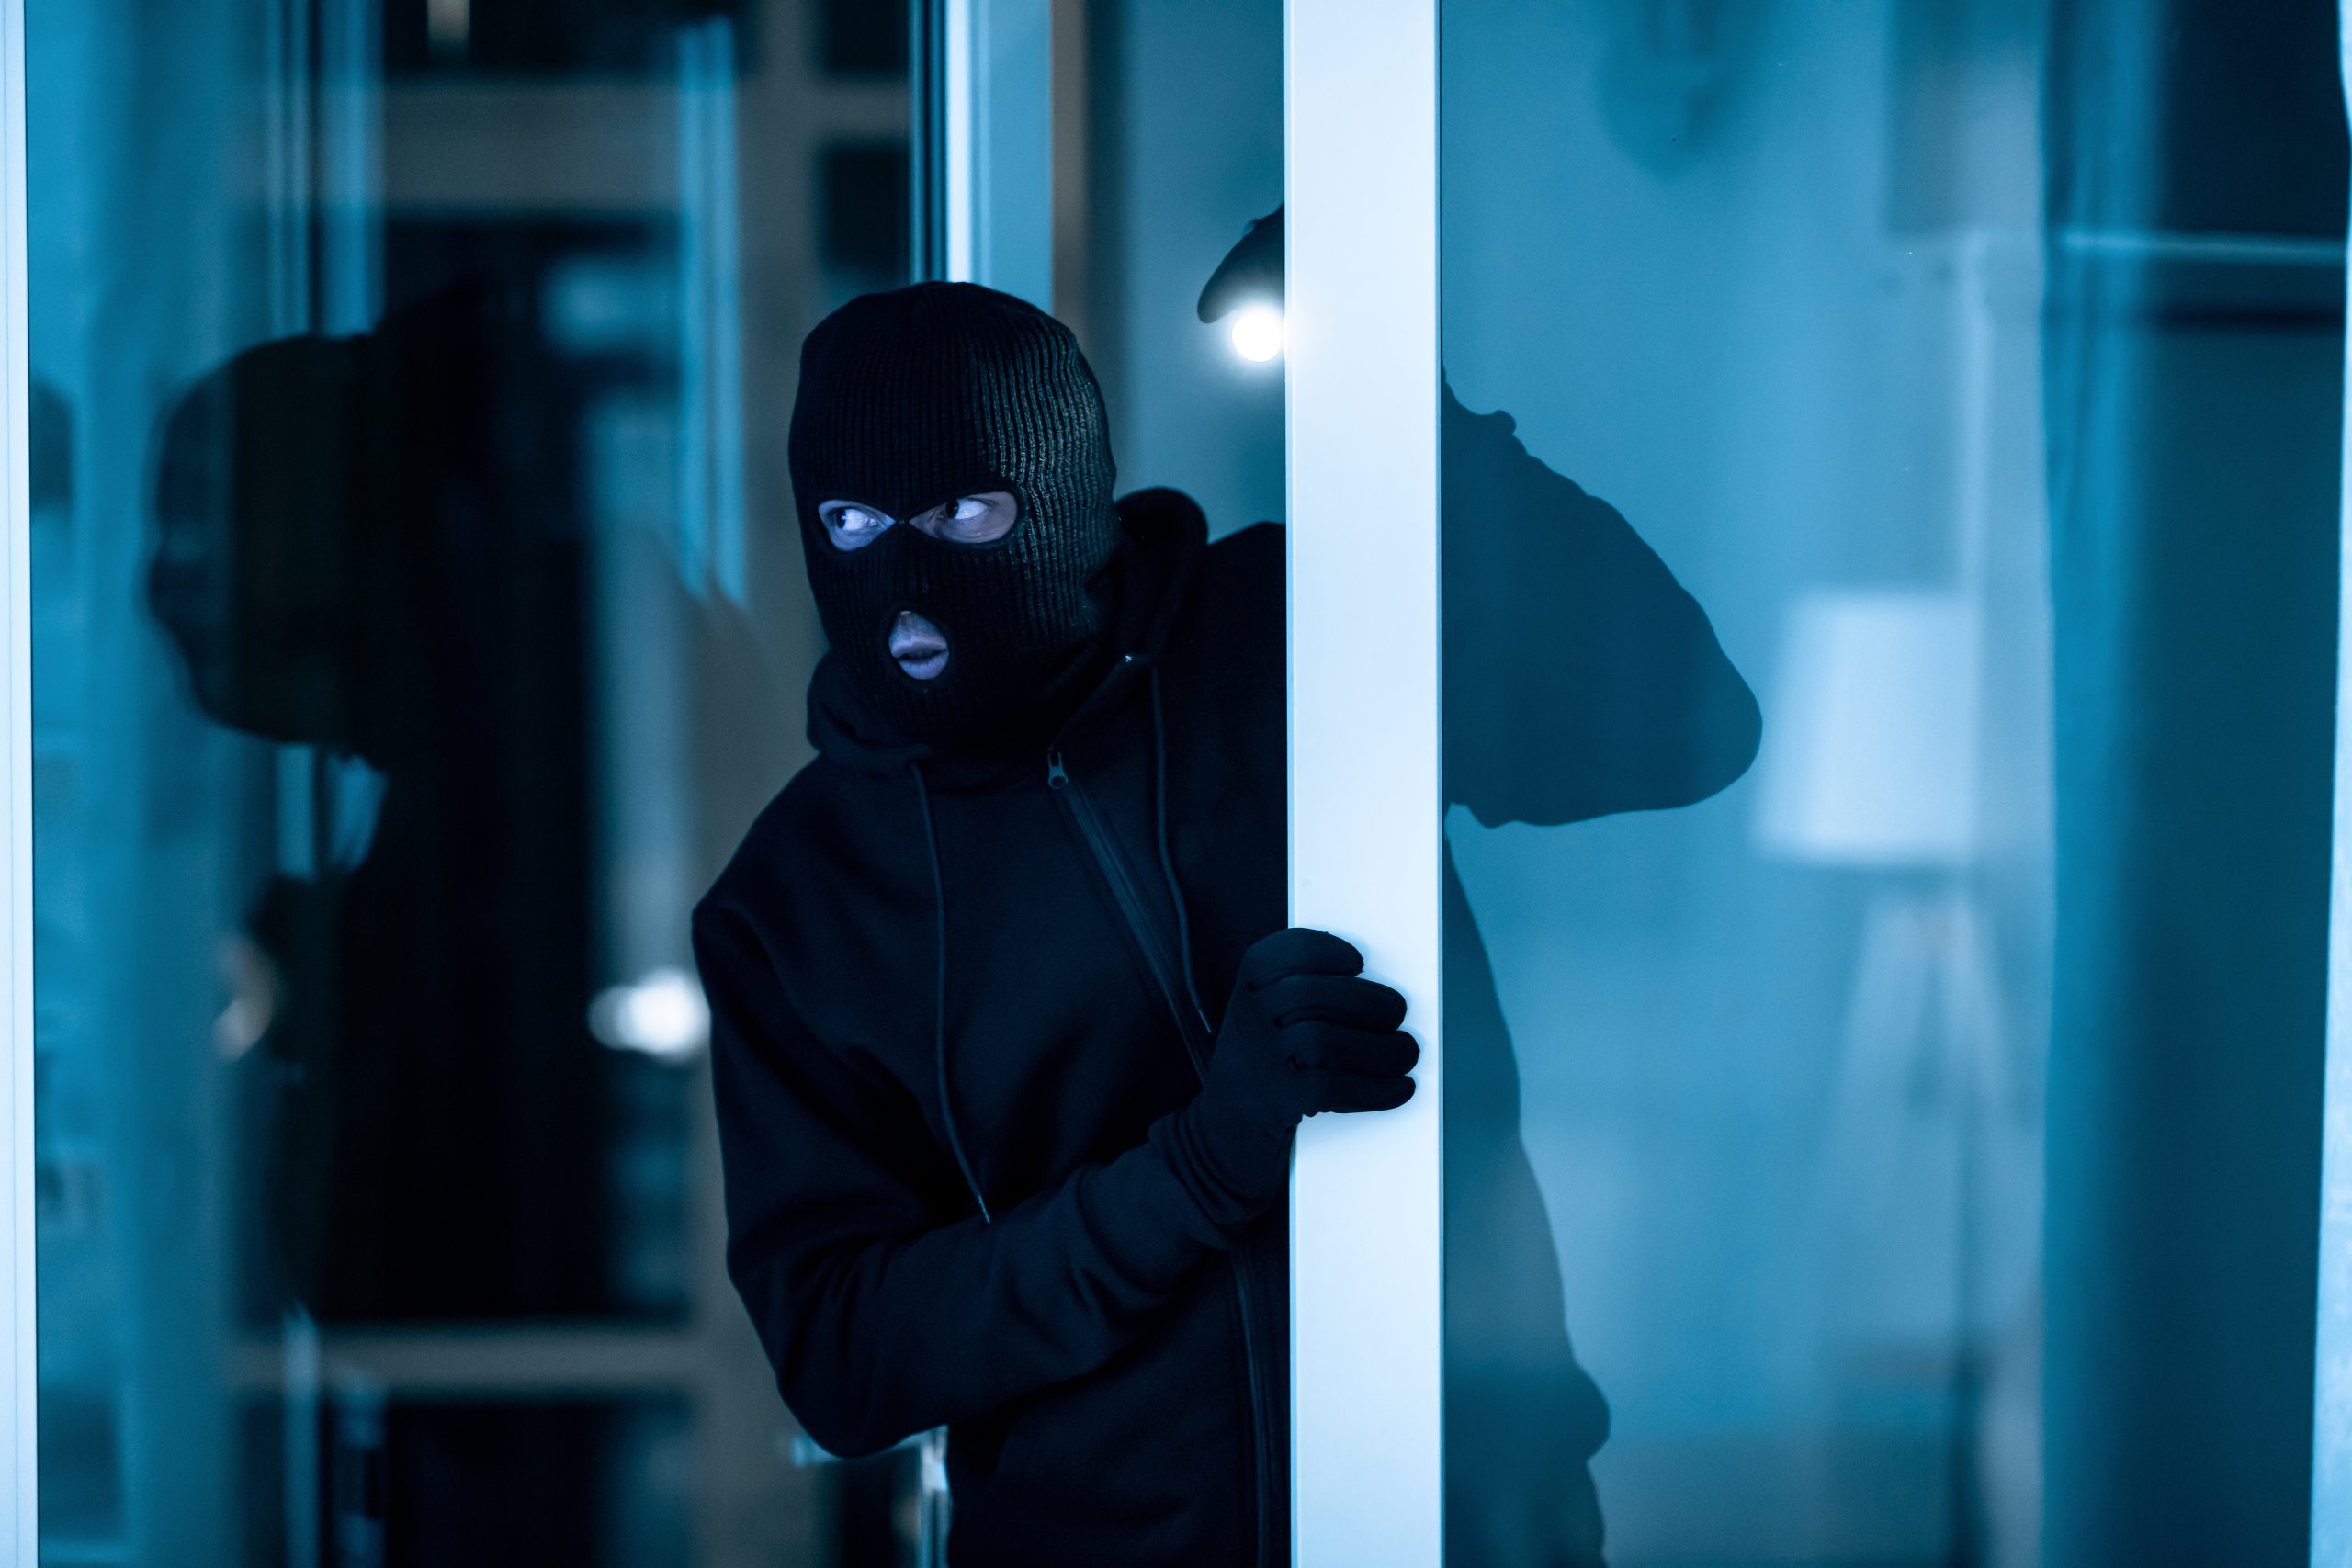 Deterring burglars